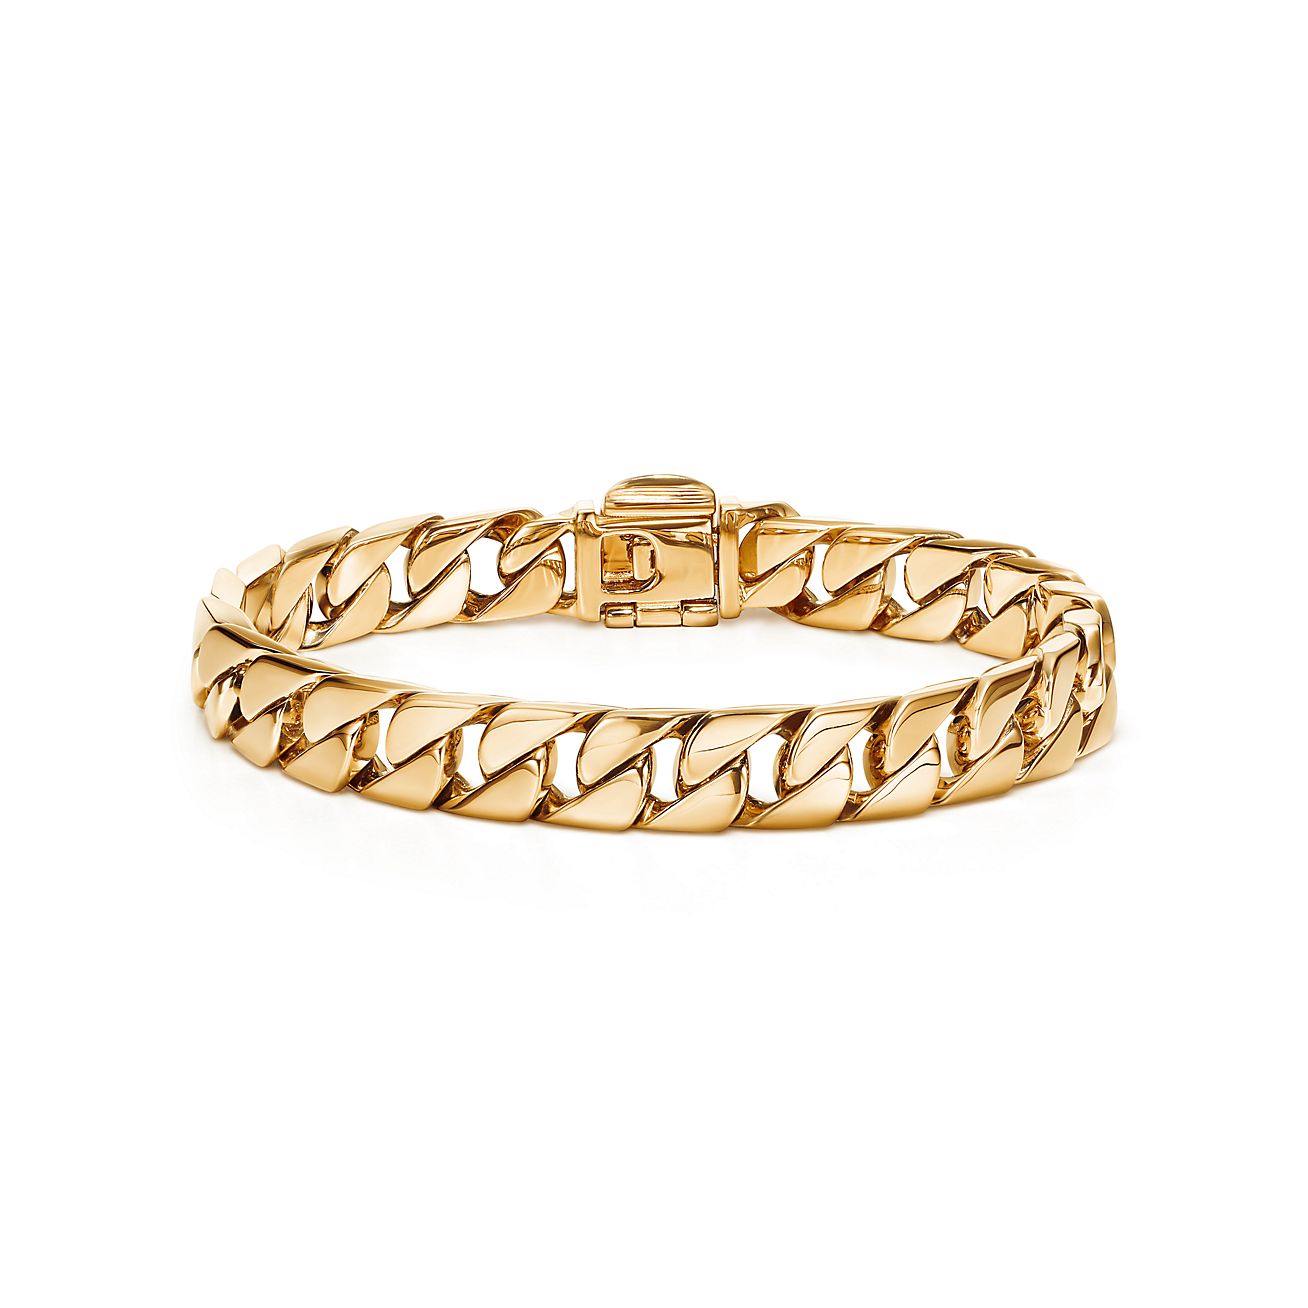 18k Gold Tiger Eye Curb Link Bracelet Mens Unisex 8in Italy New | eBay